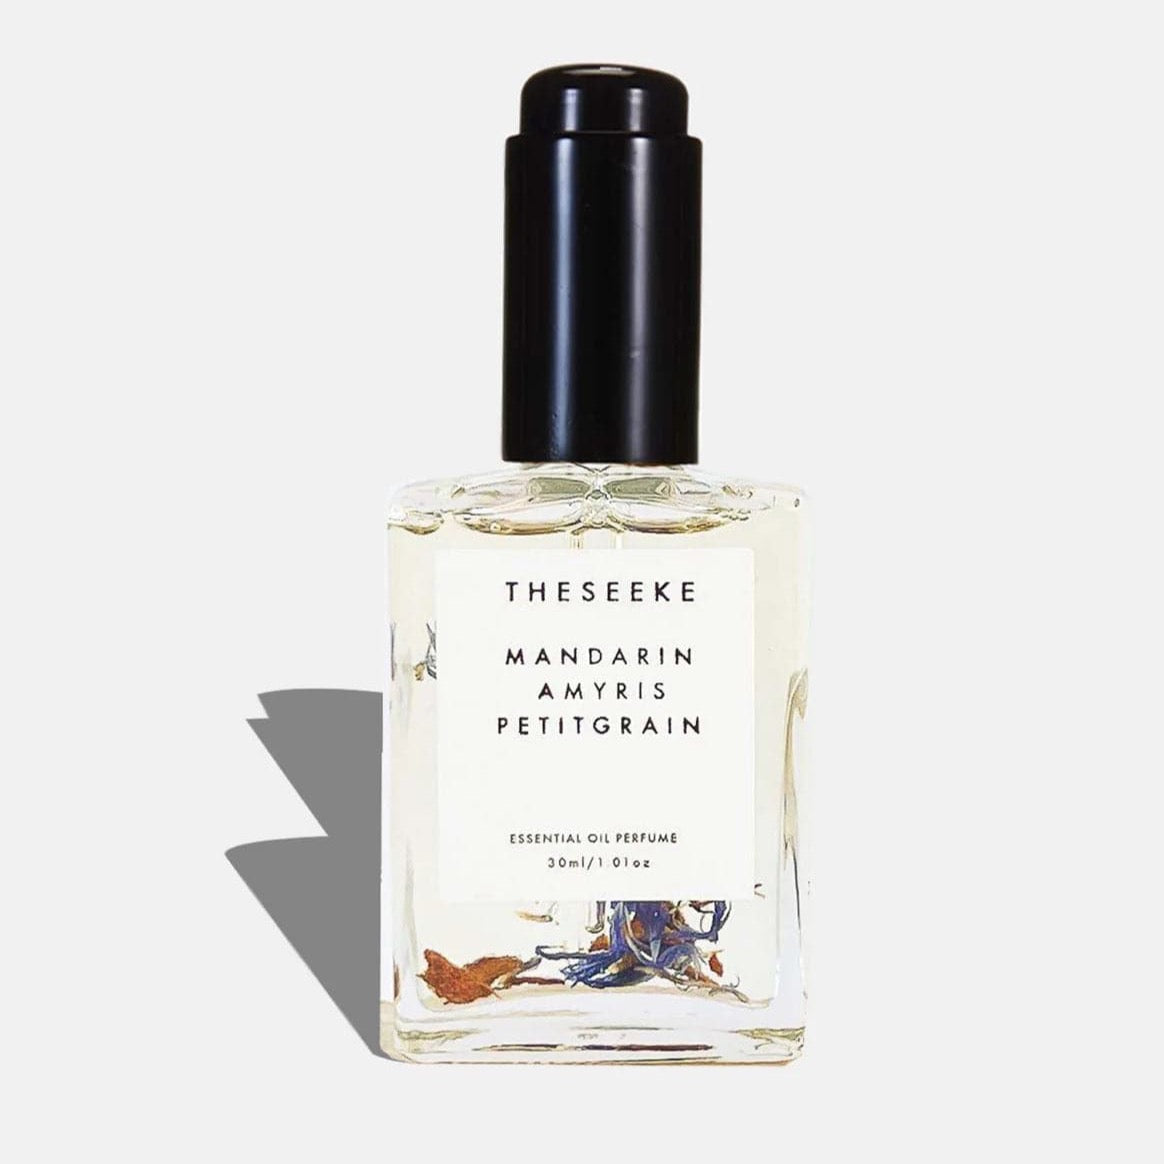 Mandarin Amyris & Pettitgrain Oil Perfume by The Seeke